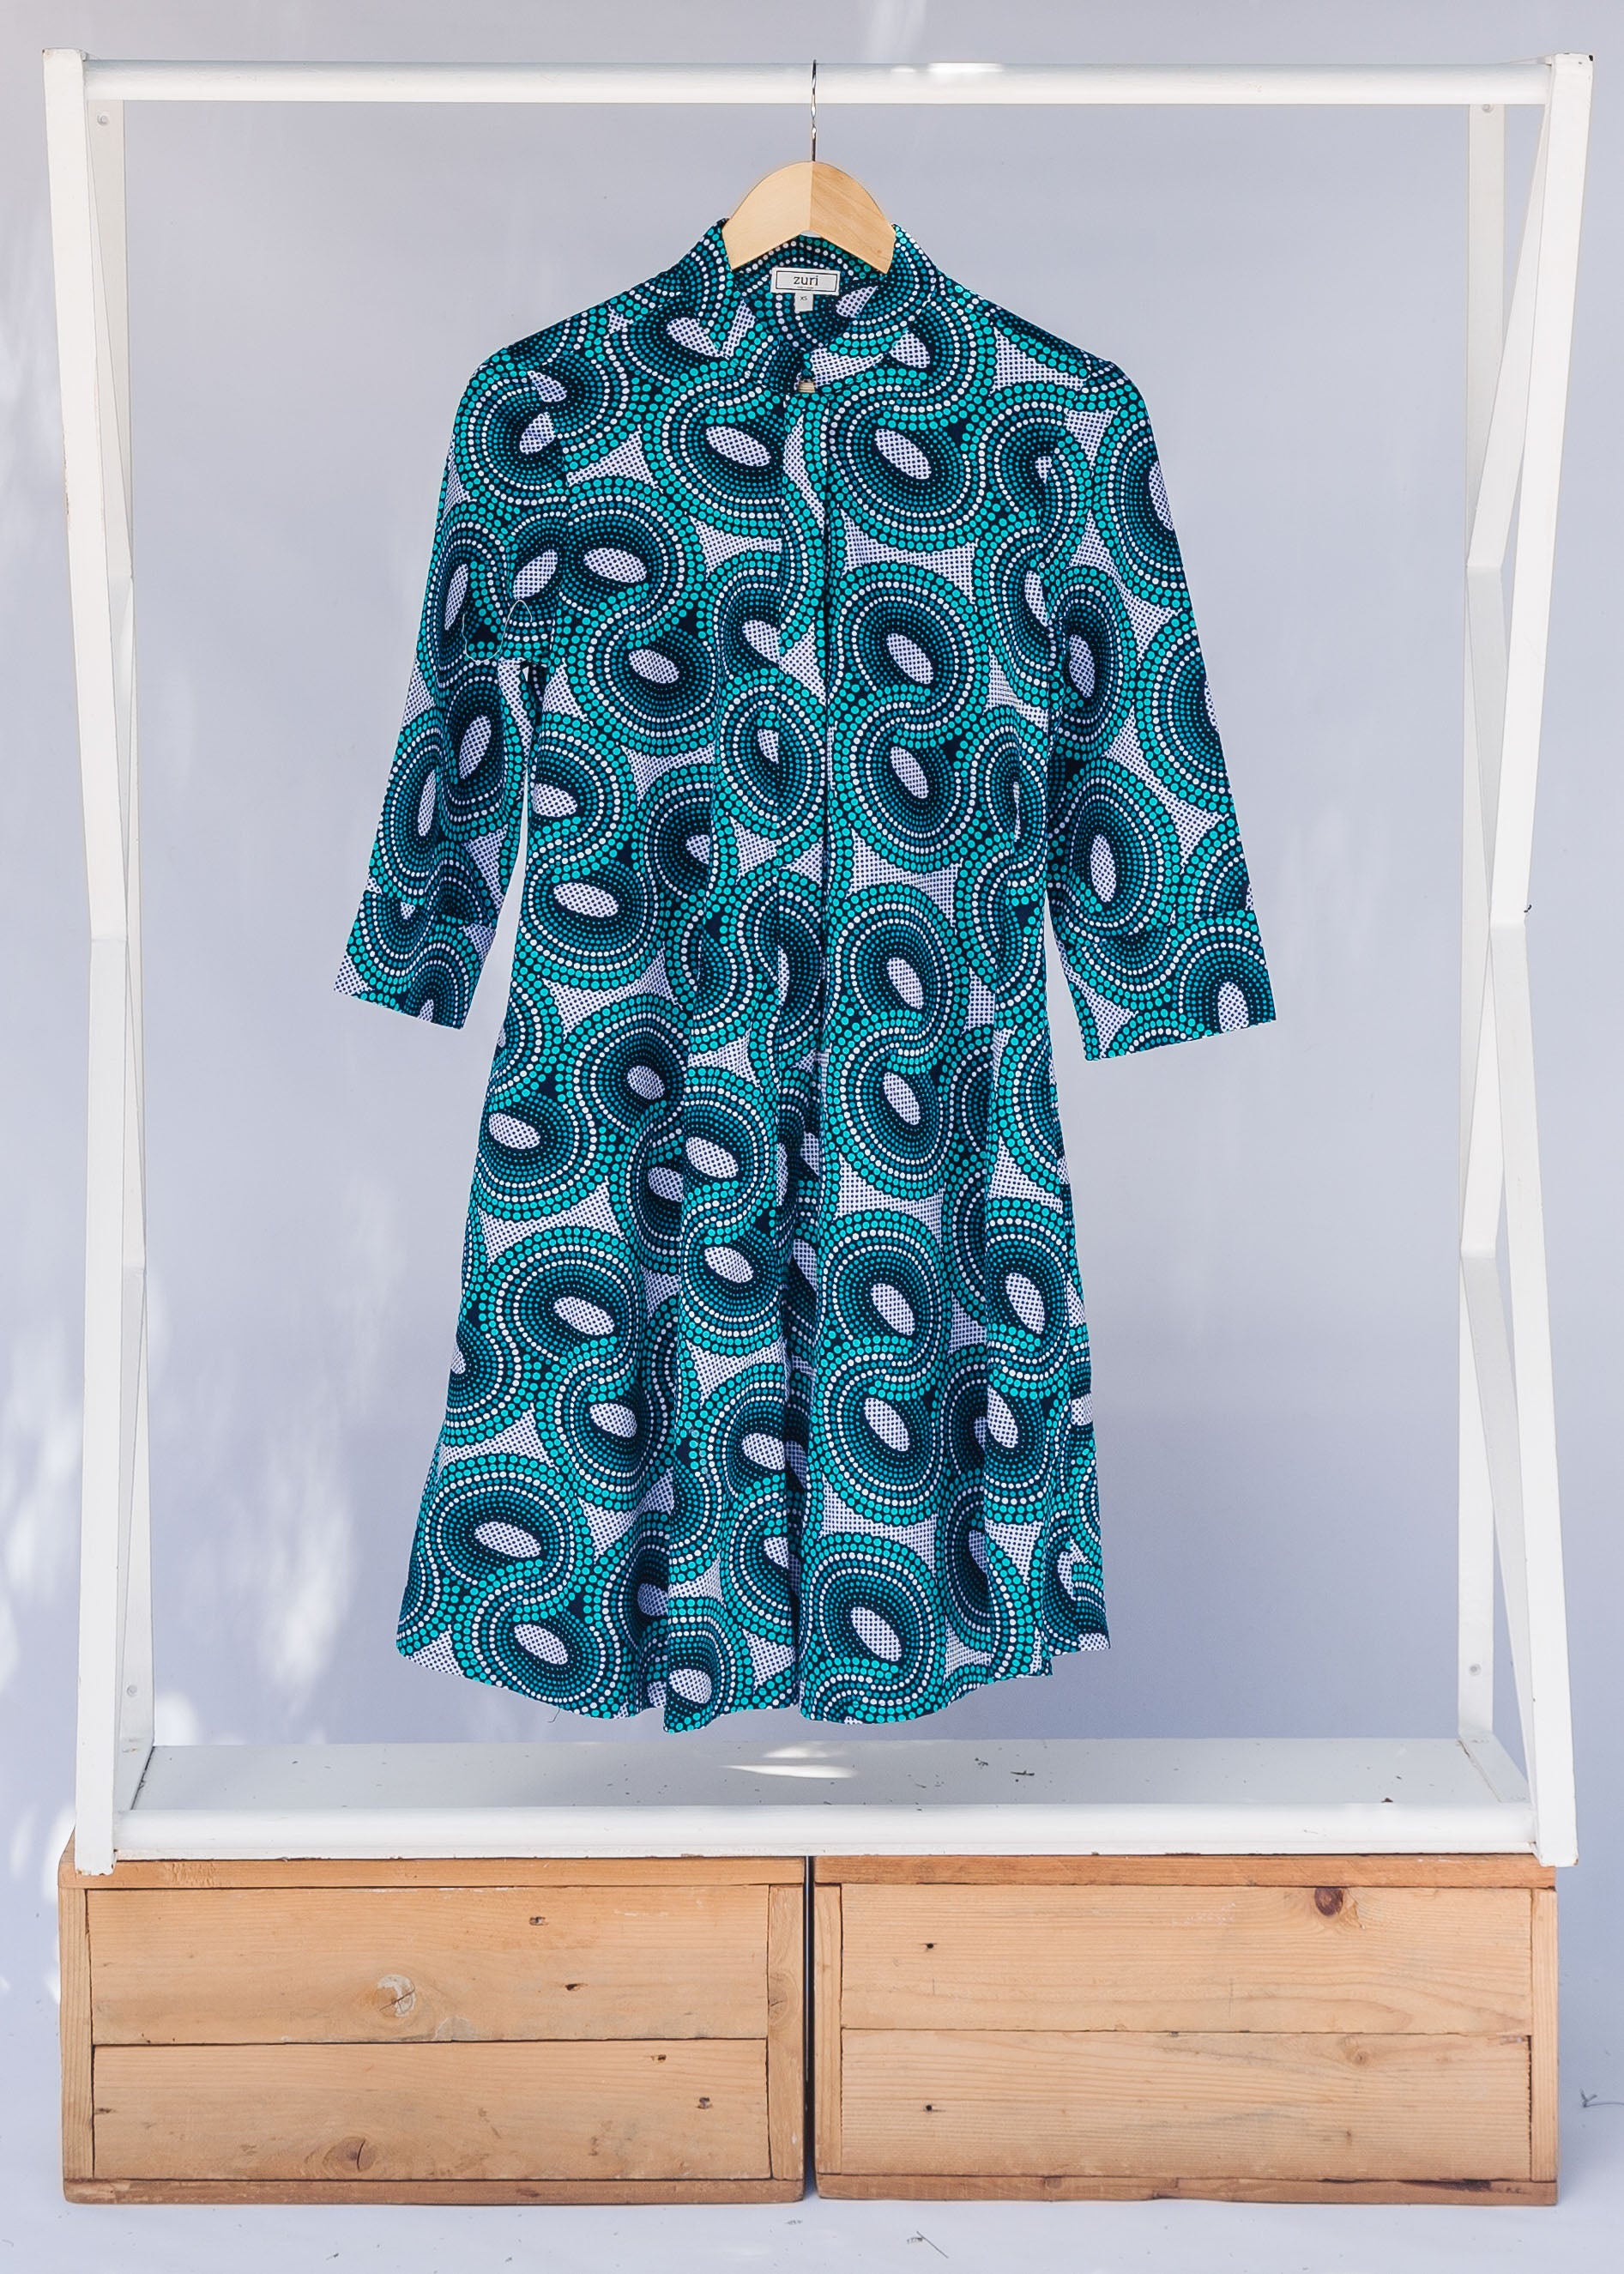 Display of dress with teal shaded loop print.